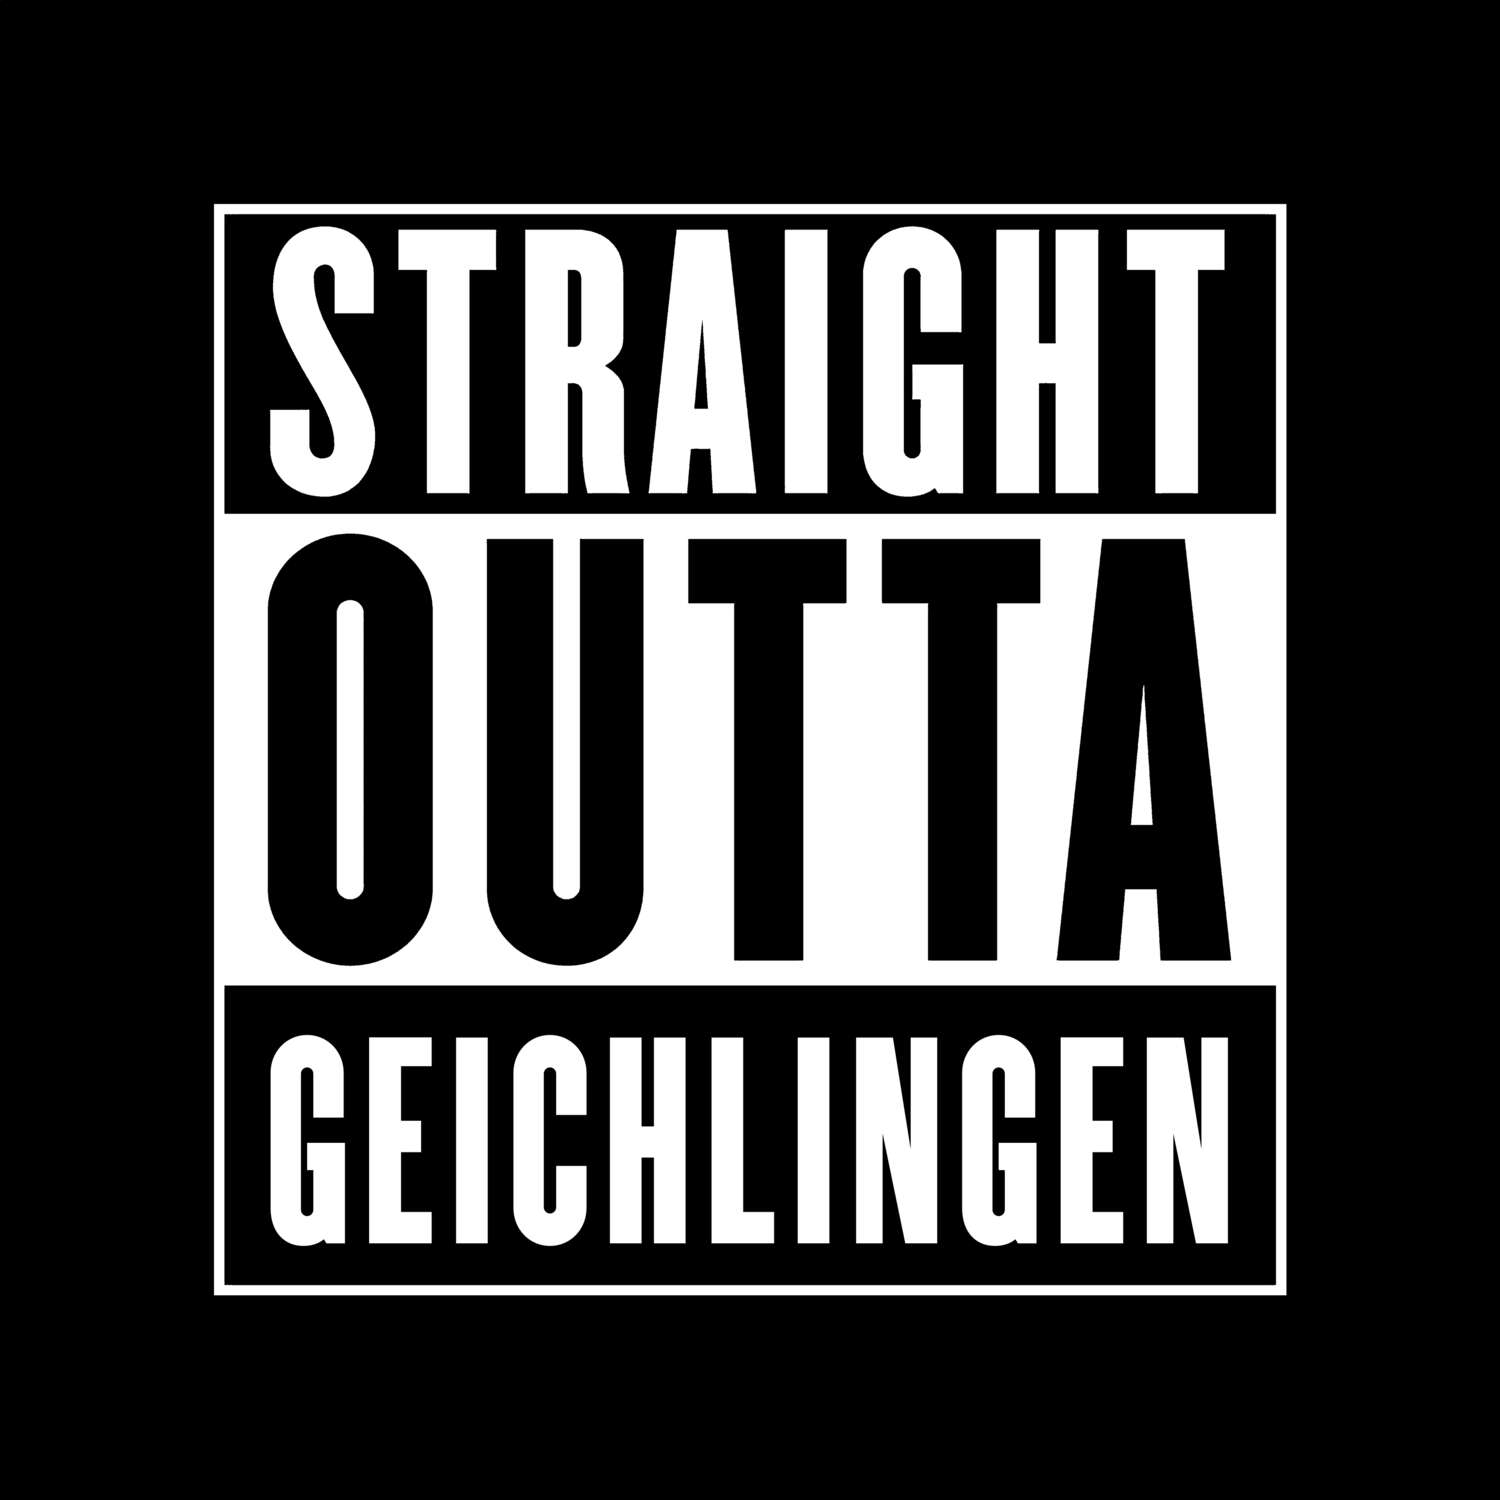 Geichlingen T-Shirt »Straight Outta«